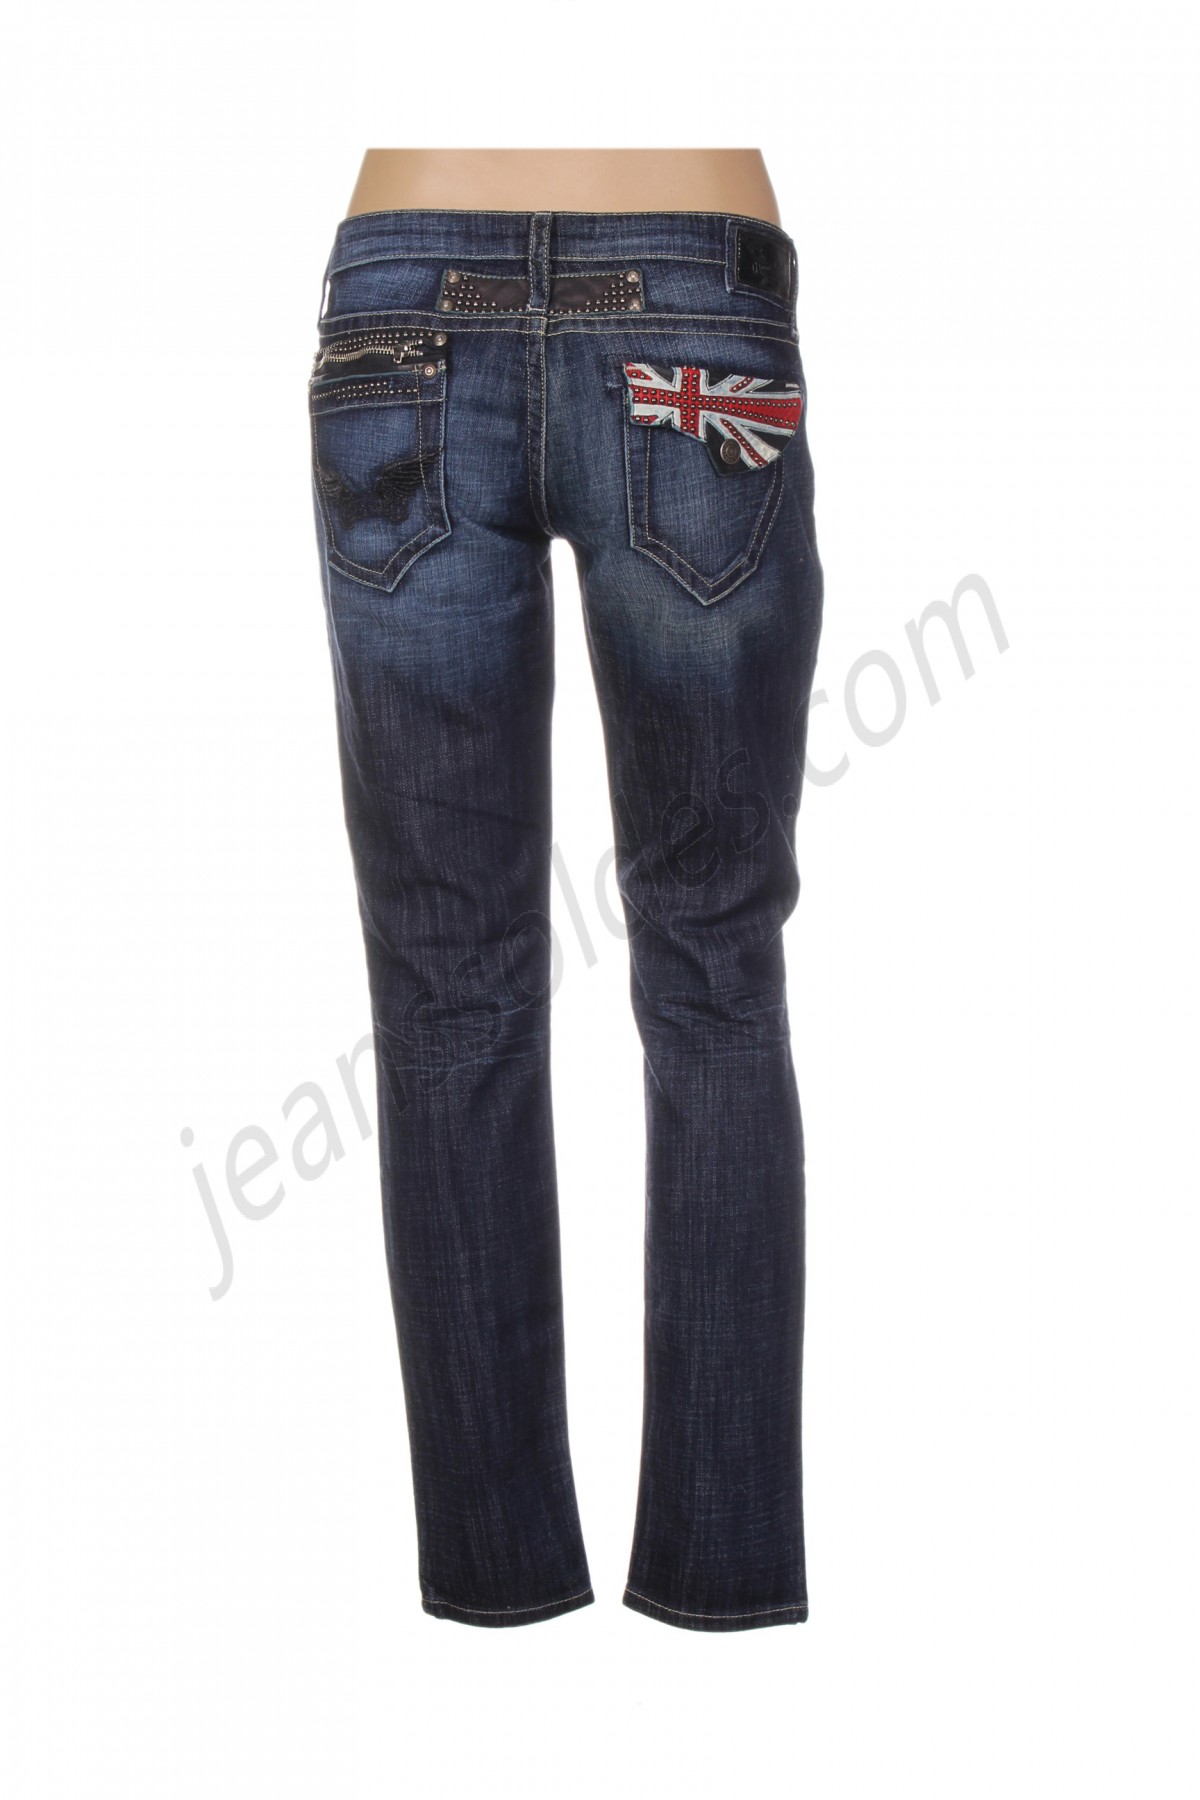 robin's jean-Jeans coupe slim prix d’amis - -1